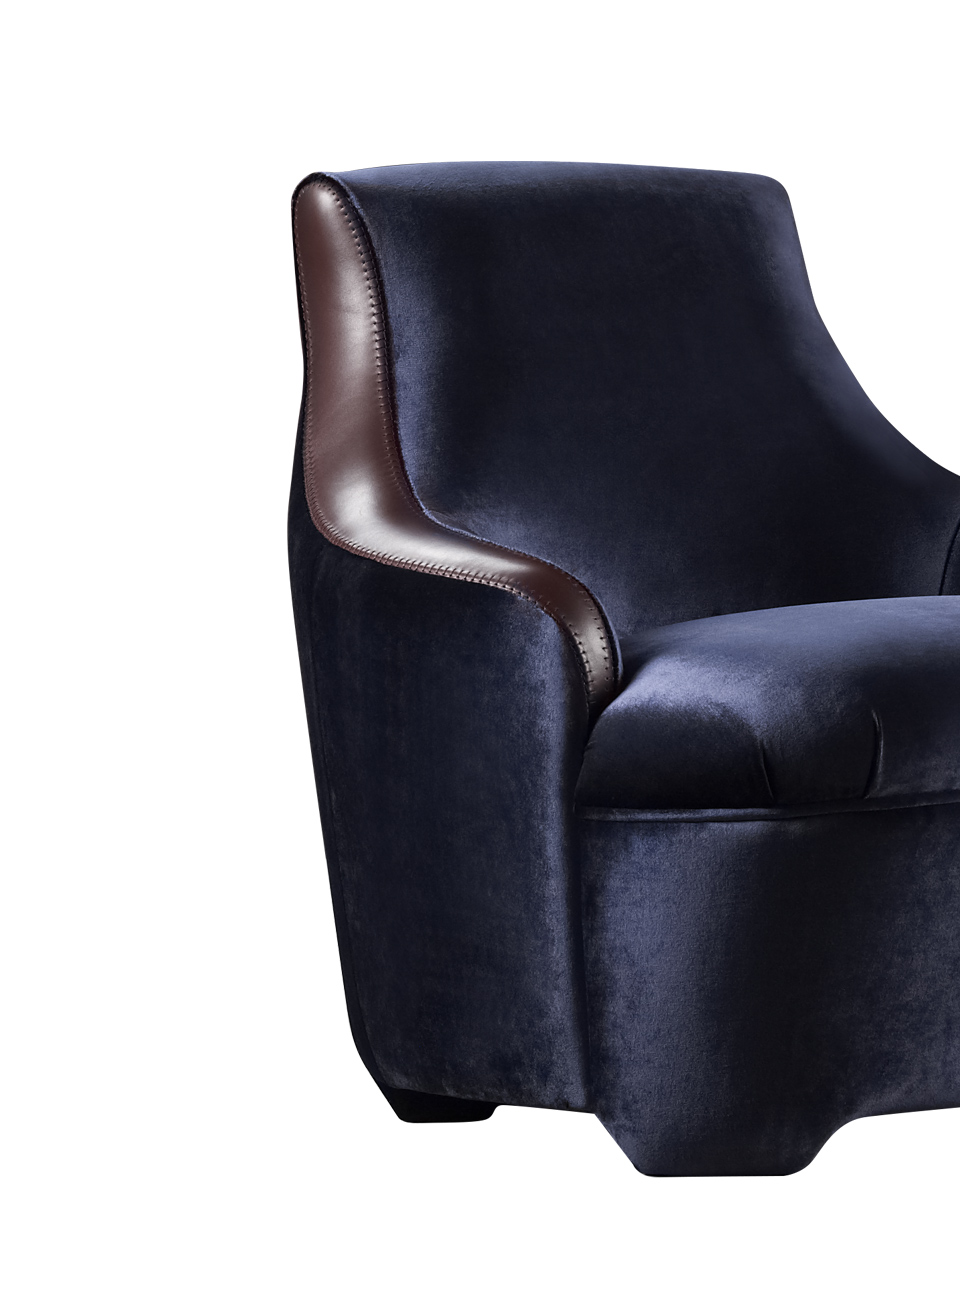 „Gioconda &amp; Giocondina“ sind zwei stoffbezogene Sessel mit Lederapplikationen, aus dem Katalog von Promemoria | Promemoria